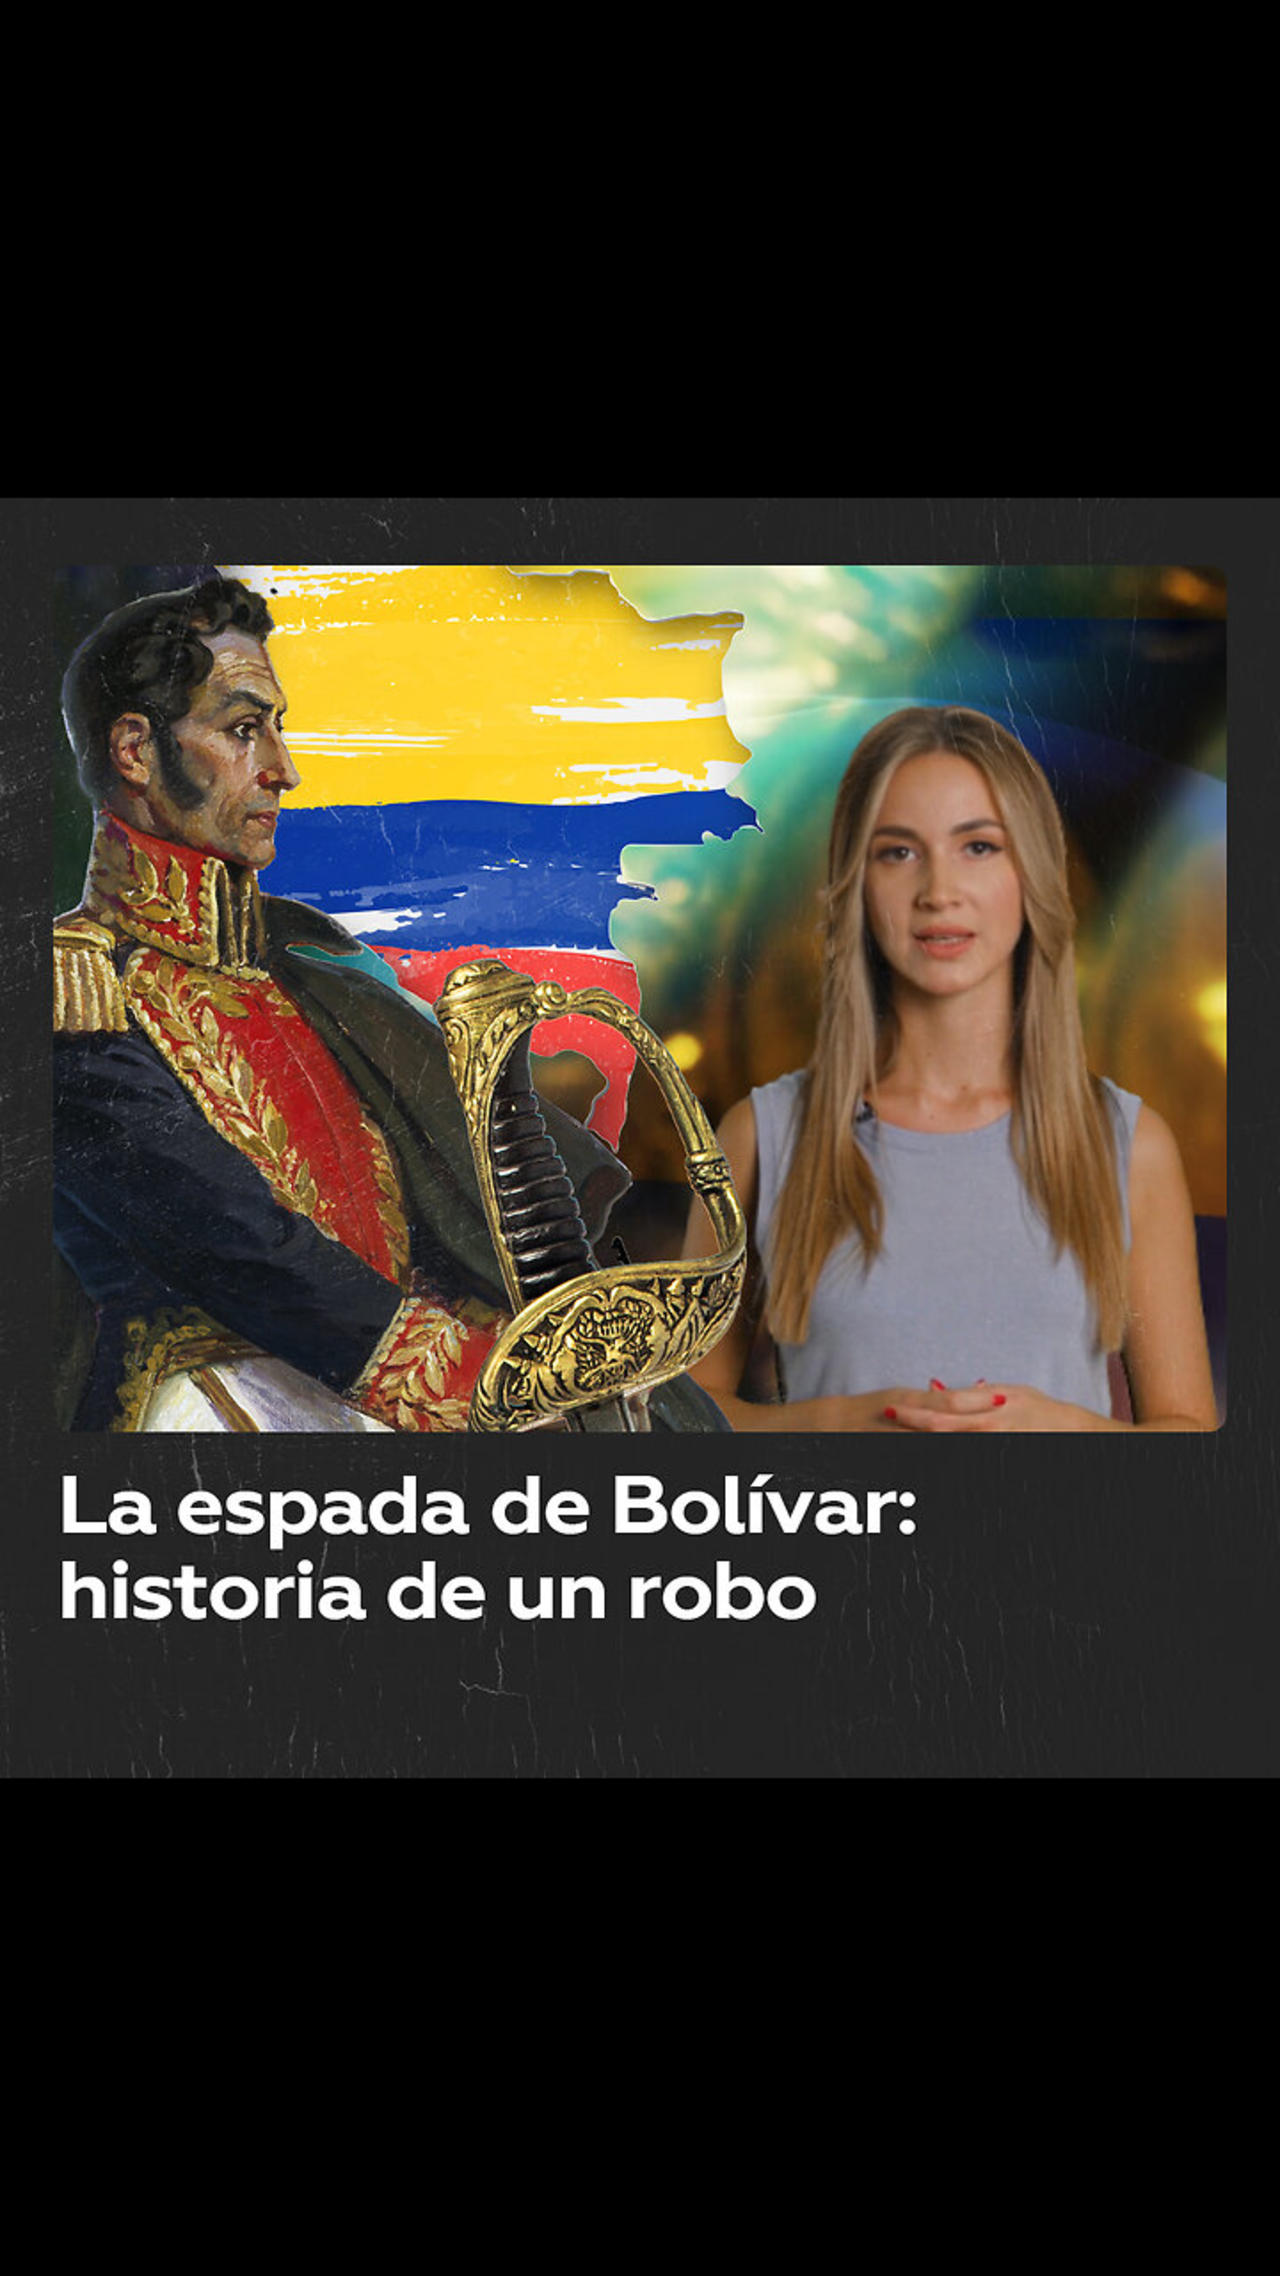 La espada de Simón Bolívar: historia del robo de un símbolo de libertad